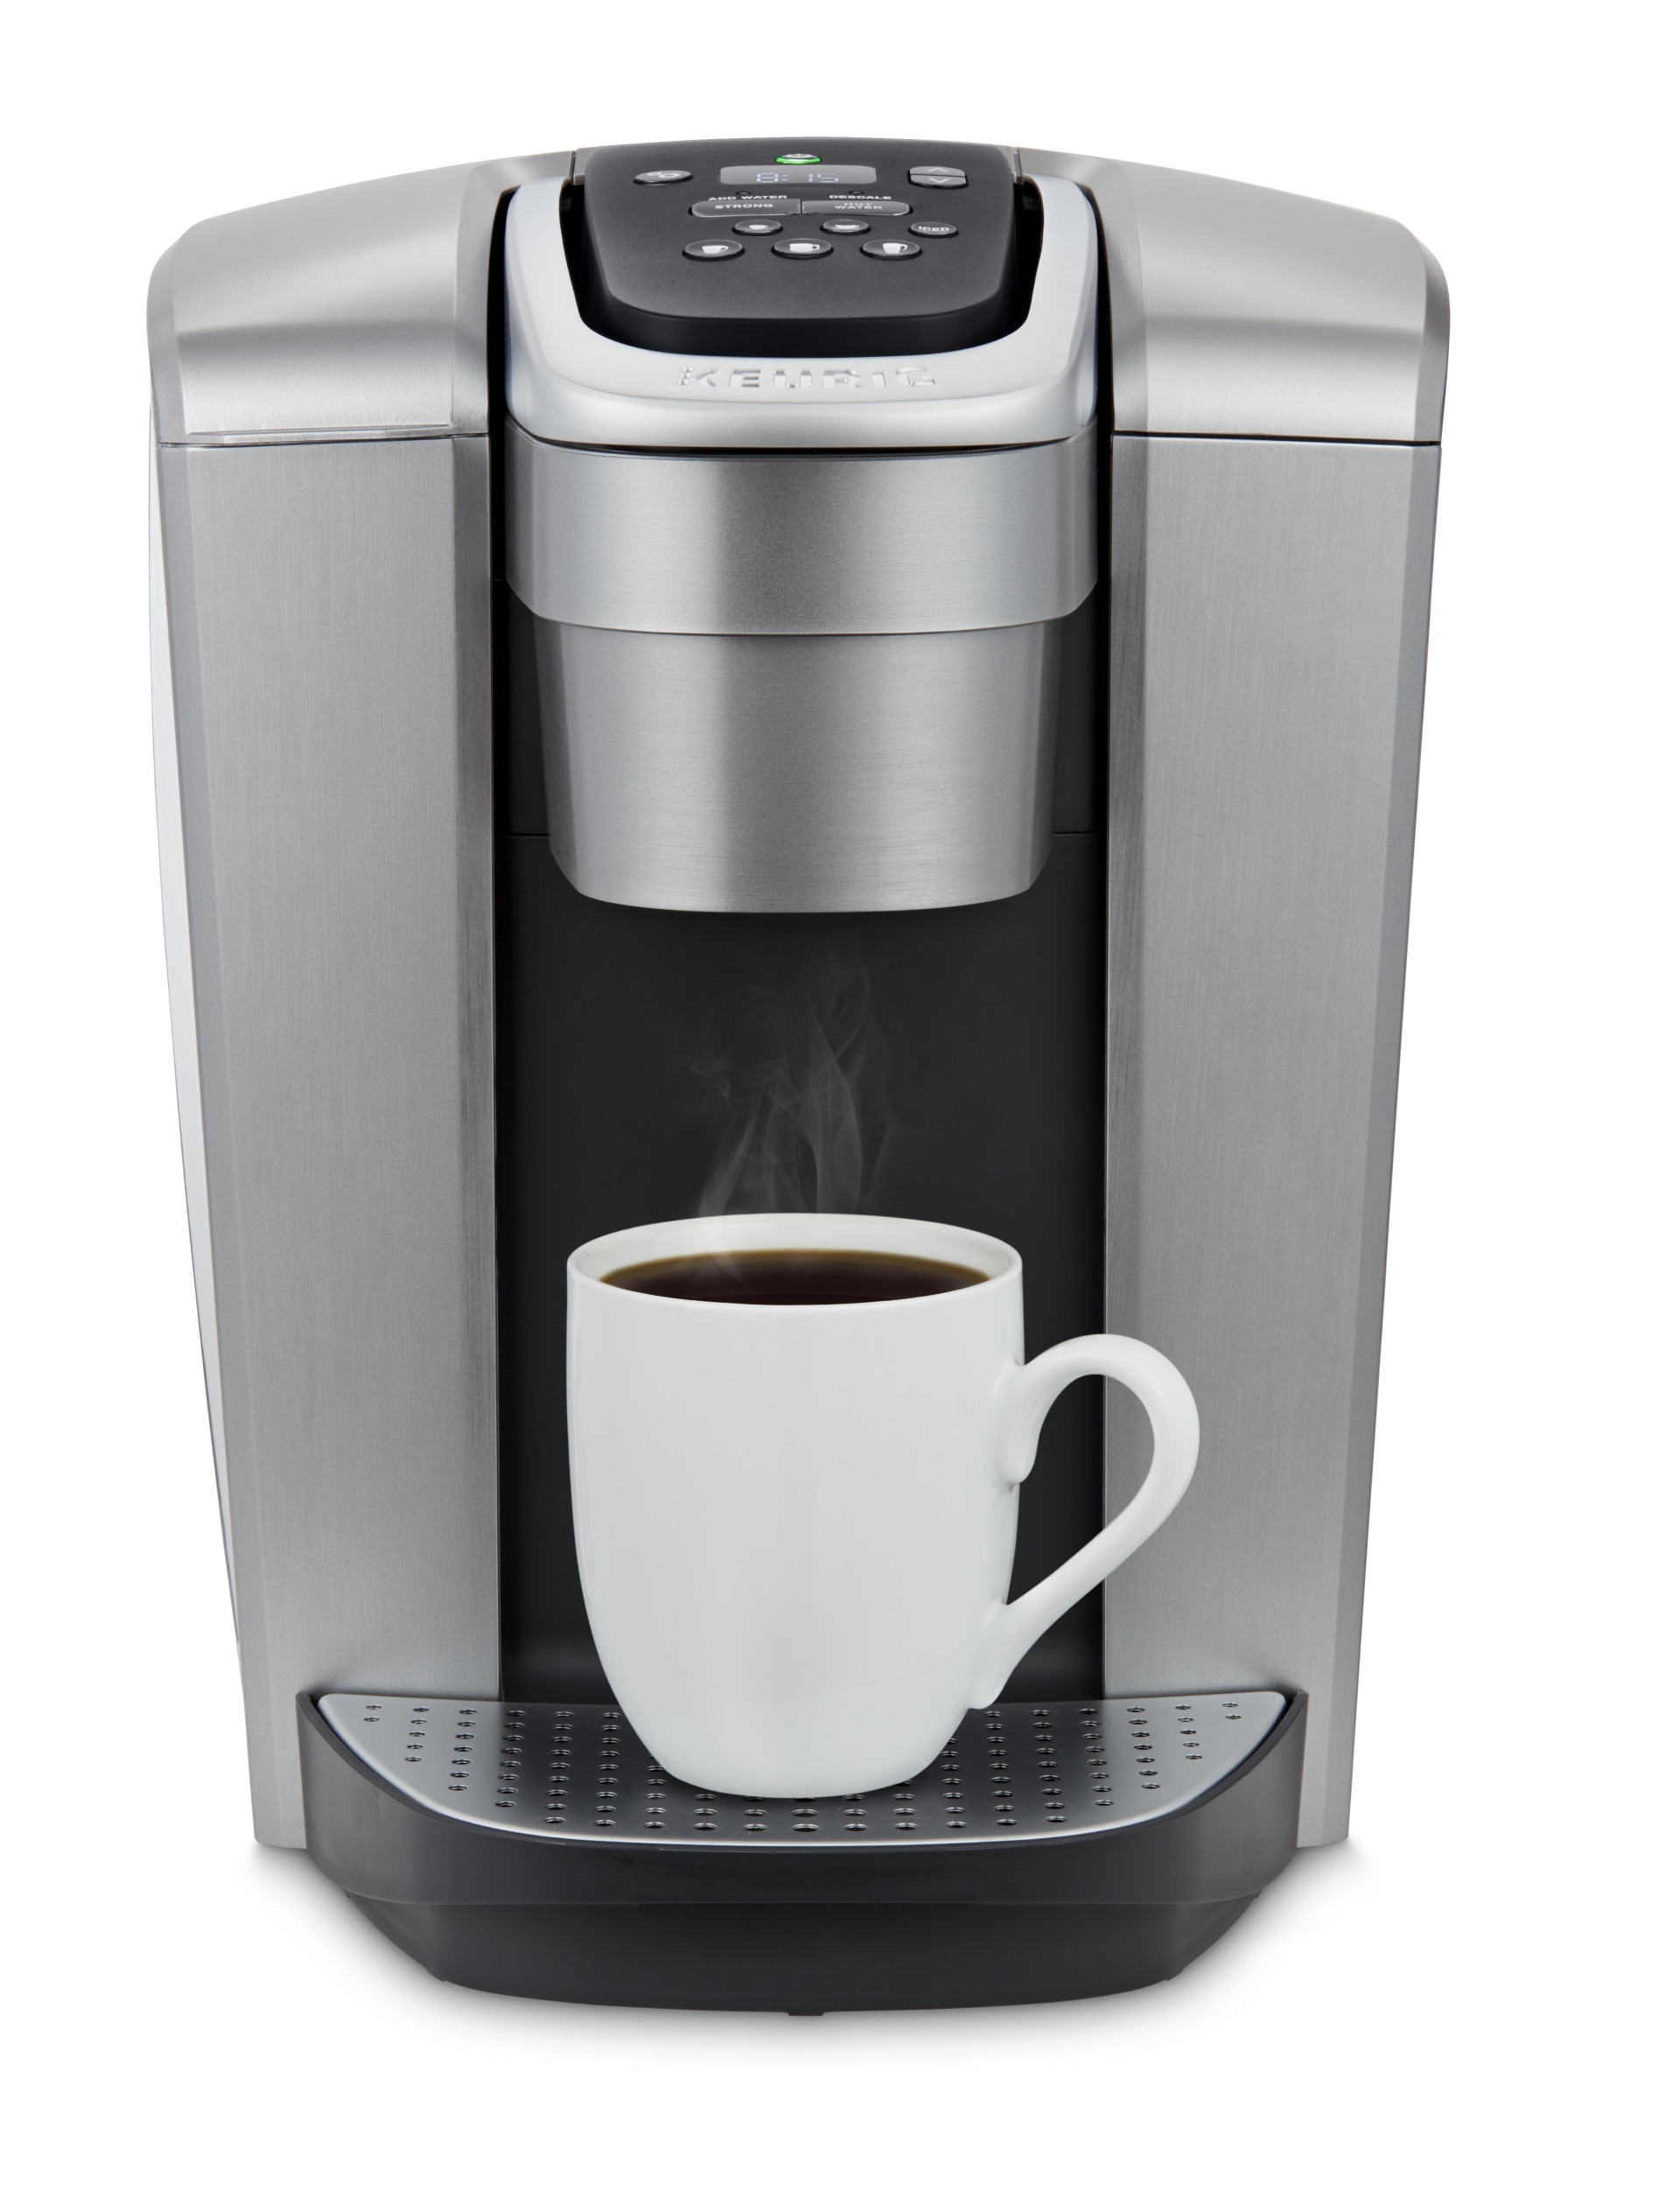 Walmart] Keurig K-Elite Hot/Cold Coffee Maker $110 - RedFlagDeals.com Forums